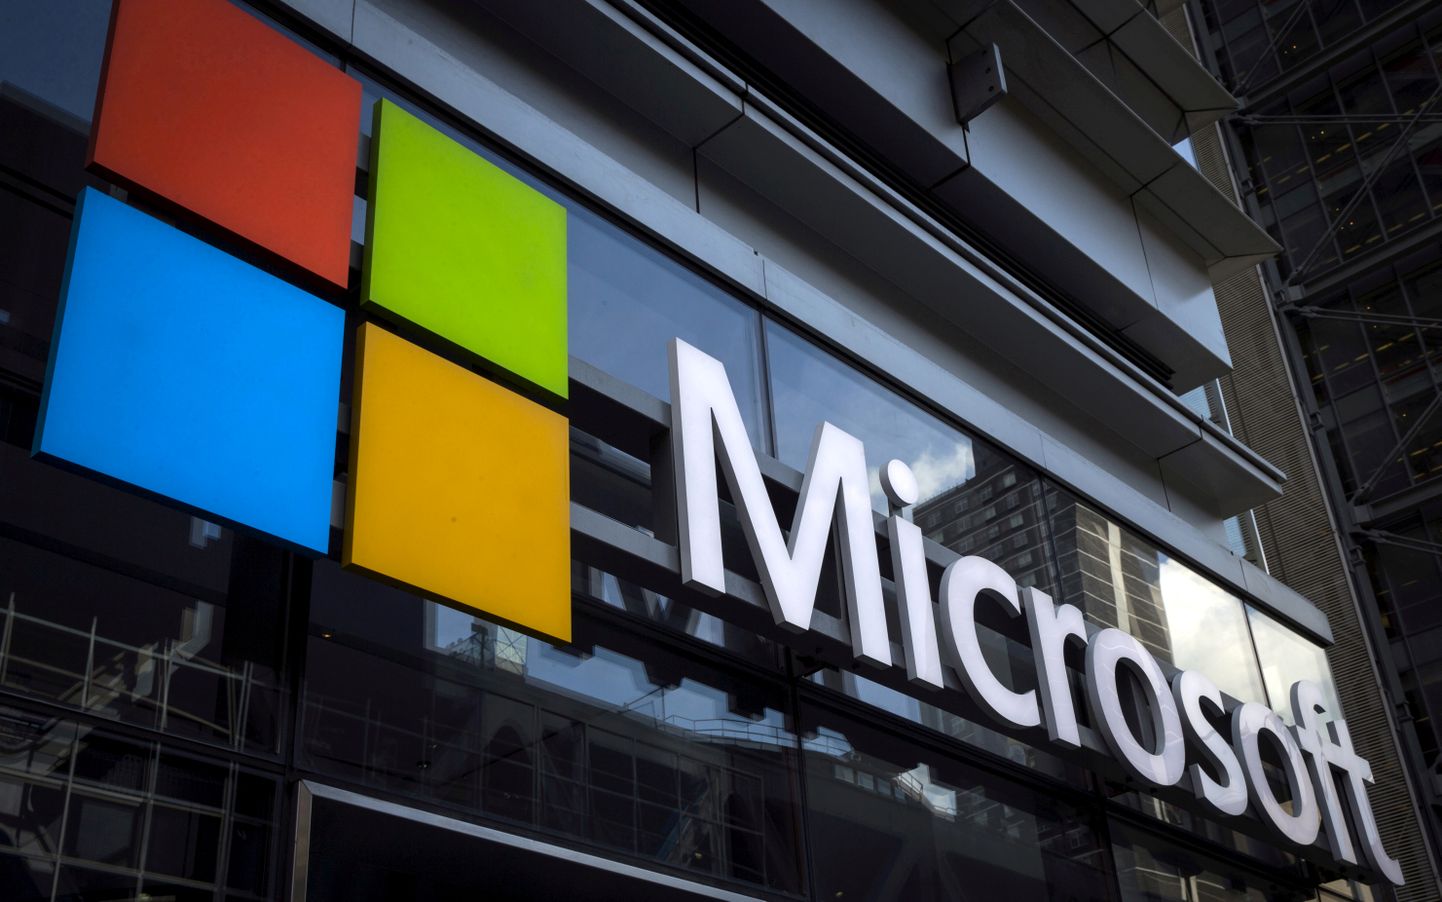 Microsofti logo